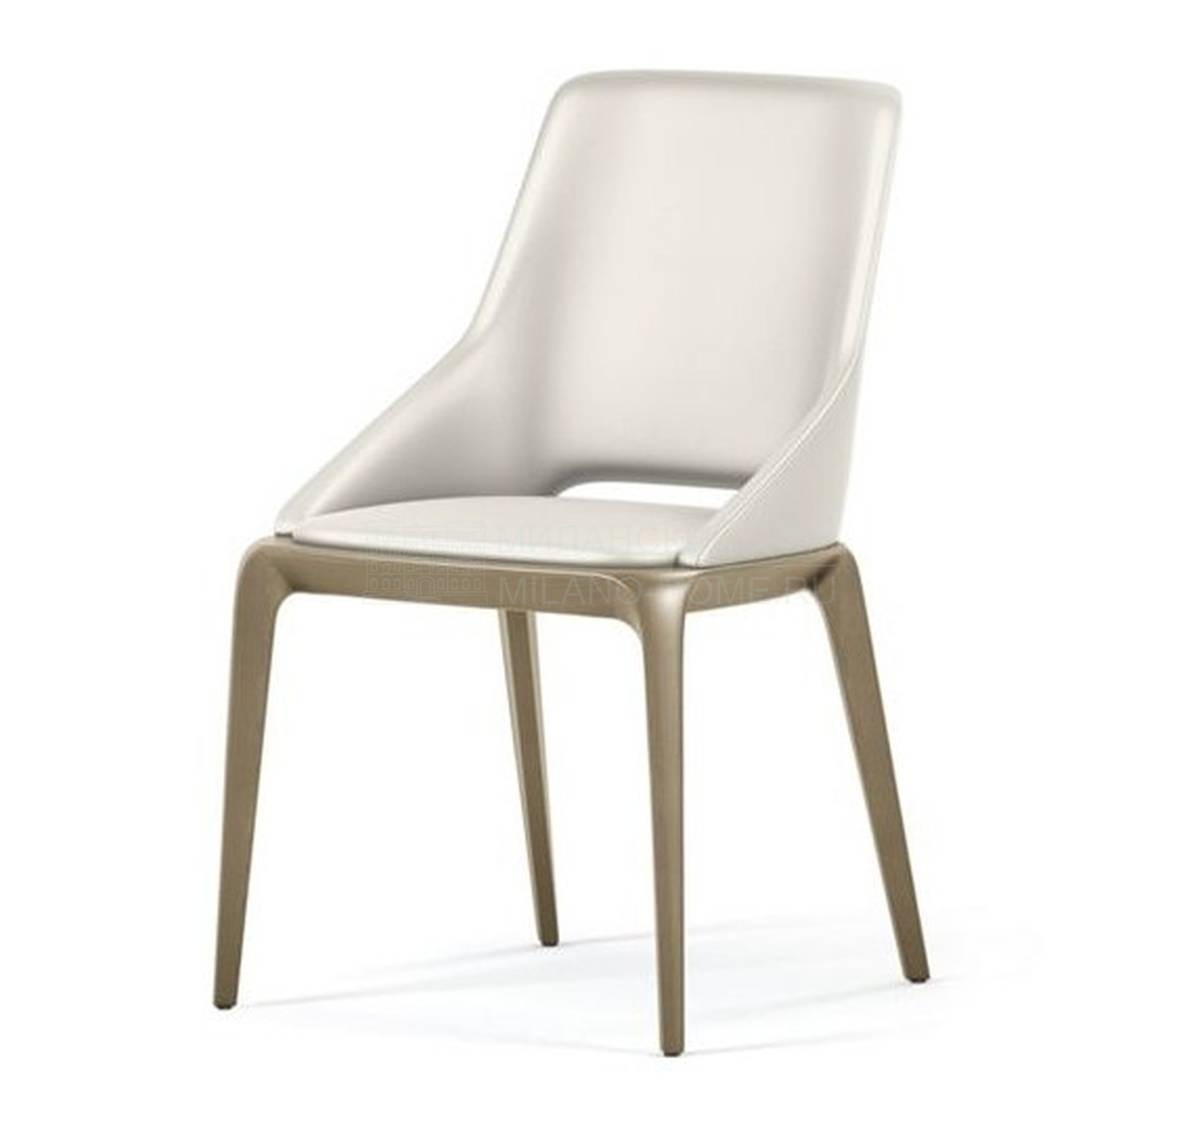 Кожаный стул Brio chair из Франции фабрики ROCHE BOBOIS